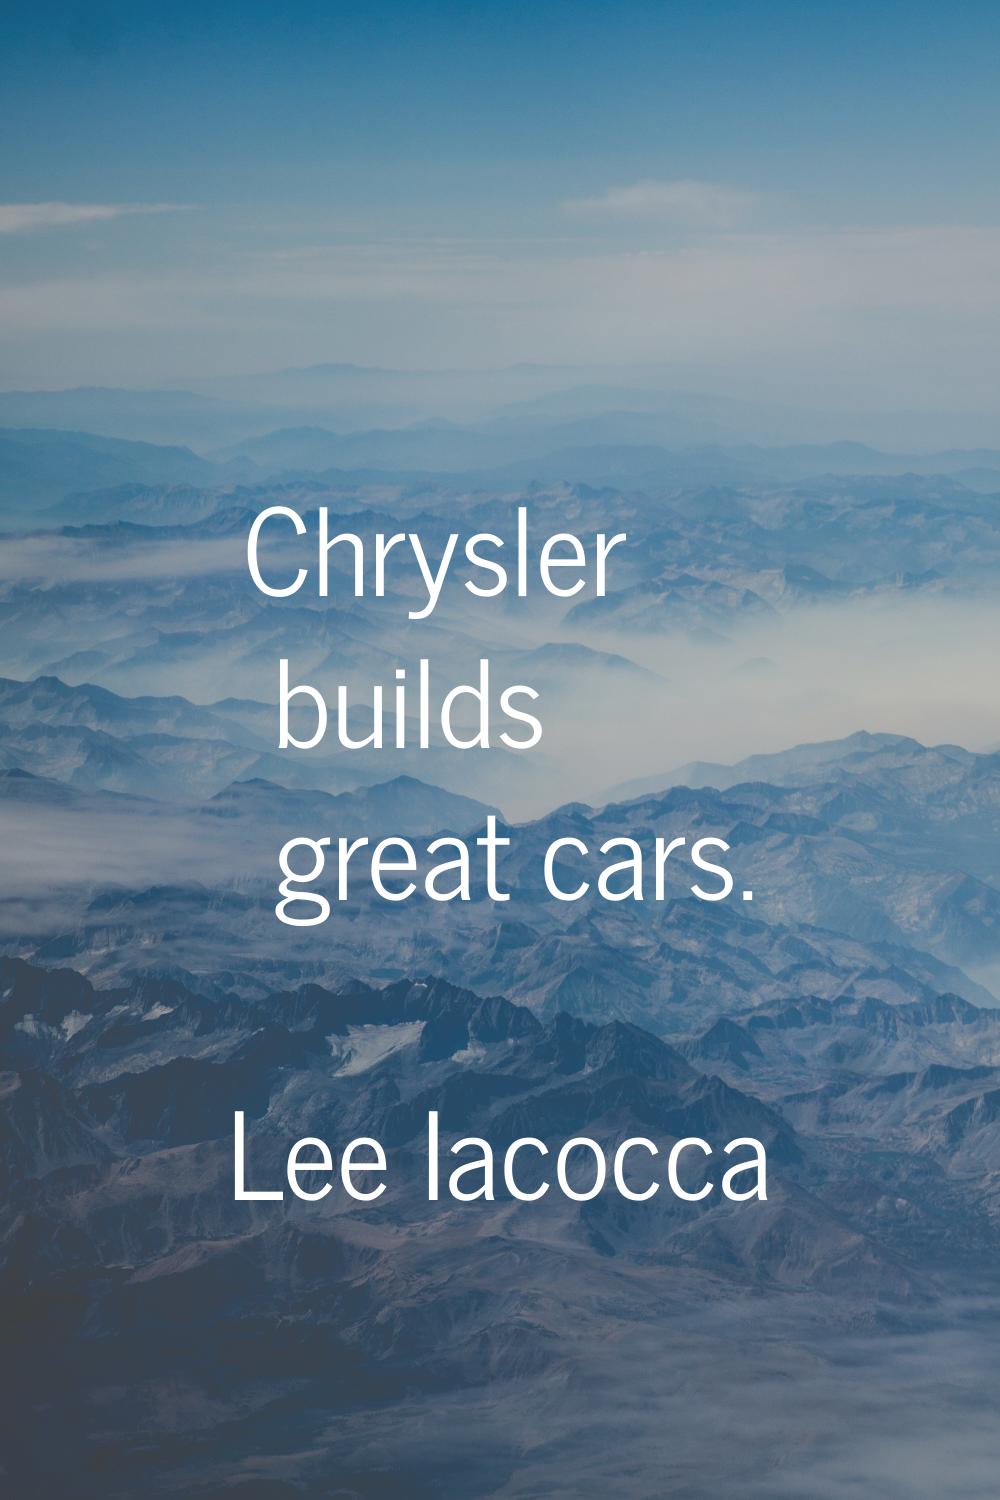 Chrysler builds great cars.